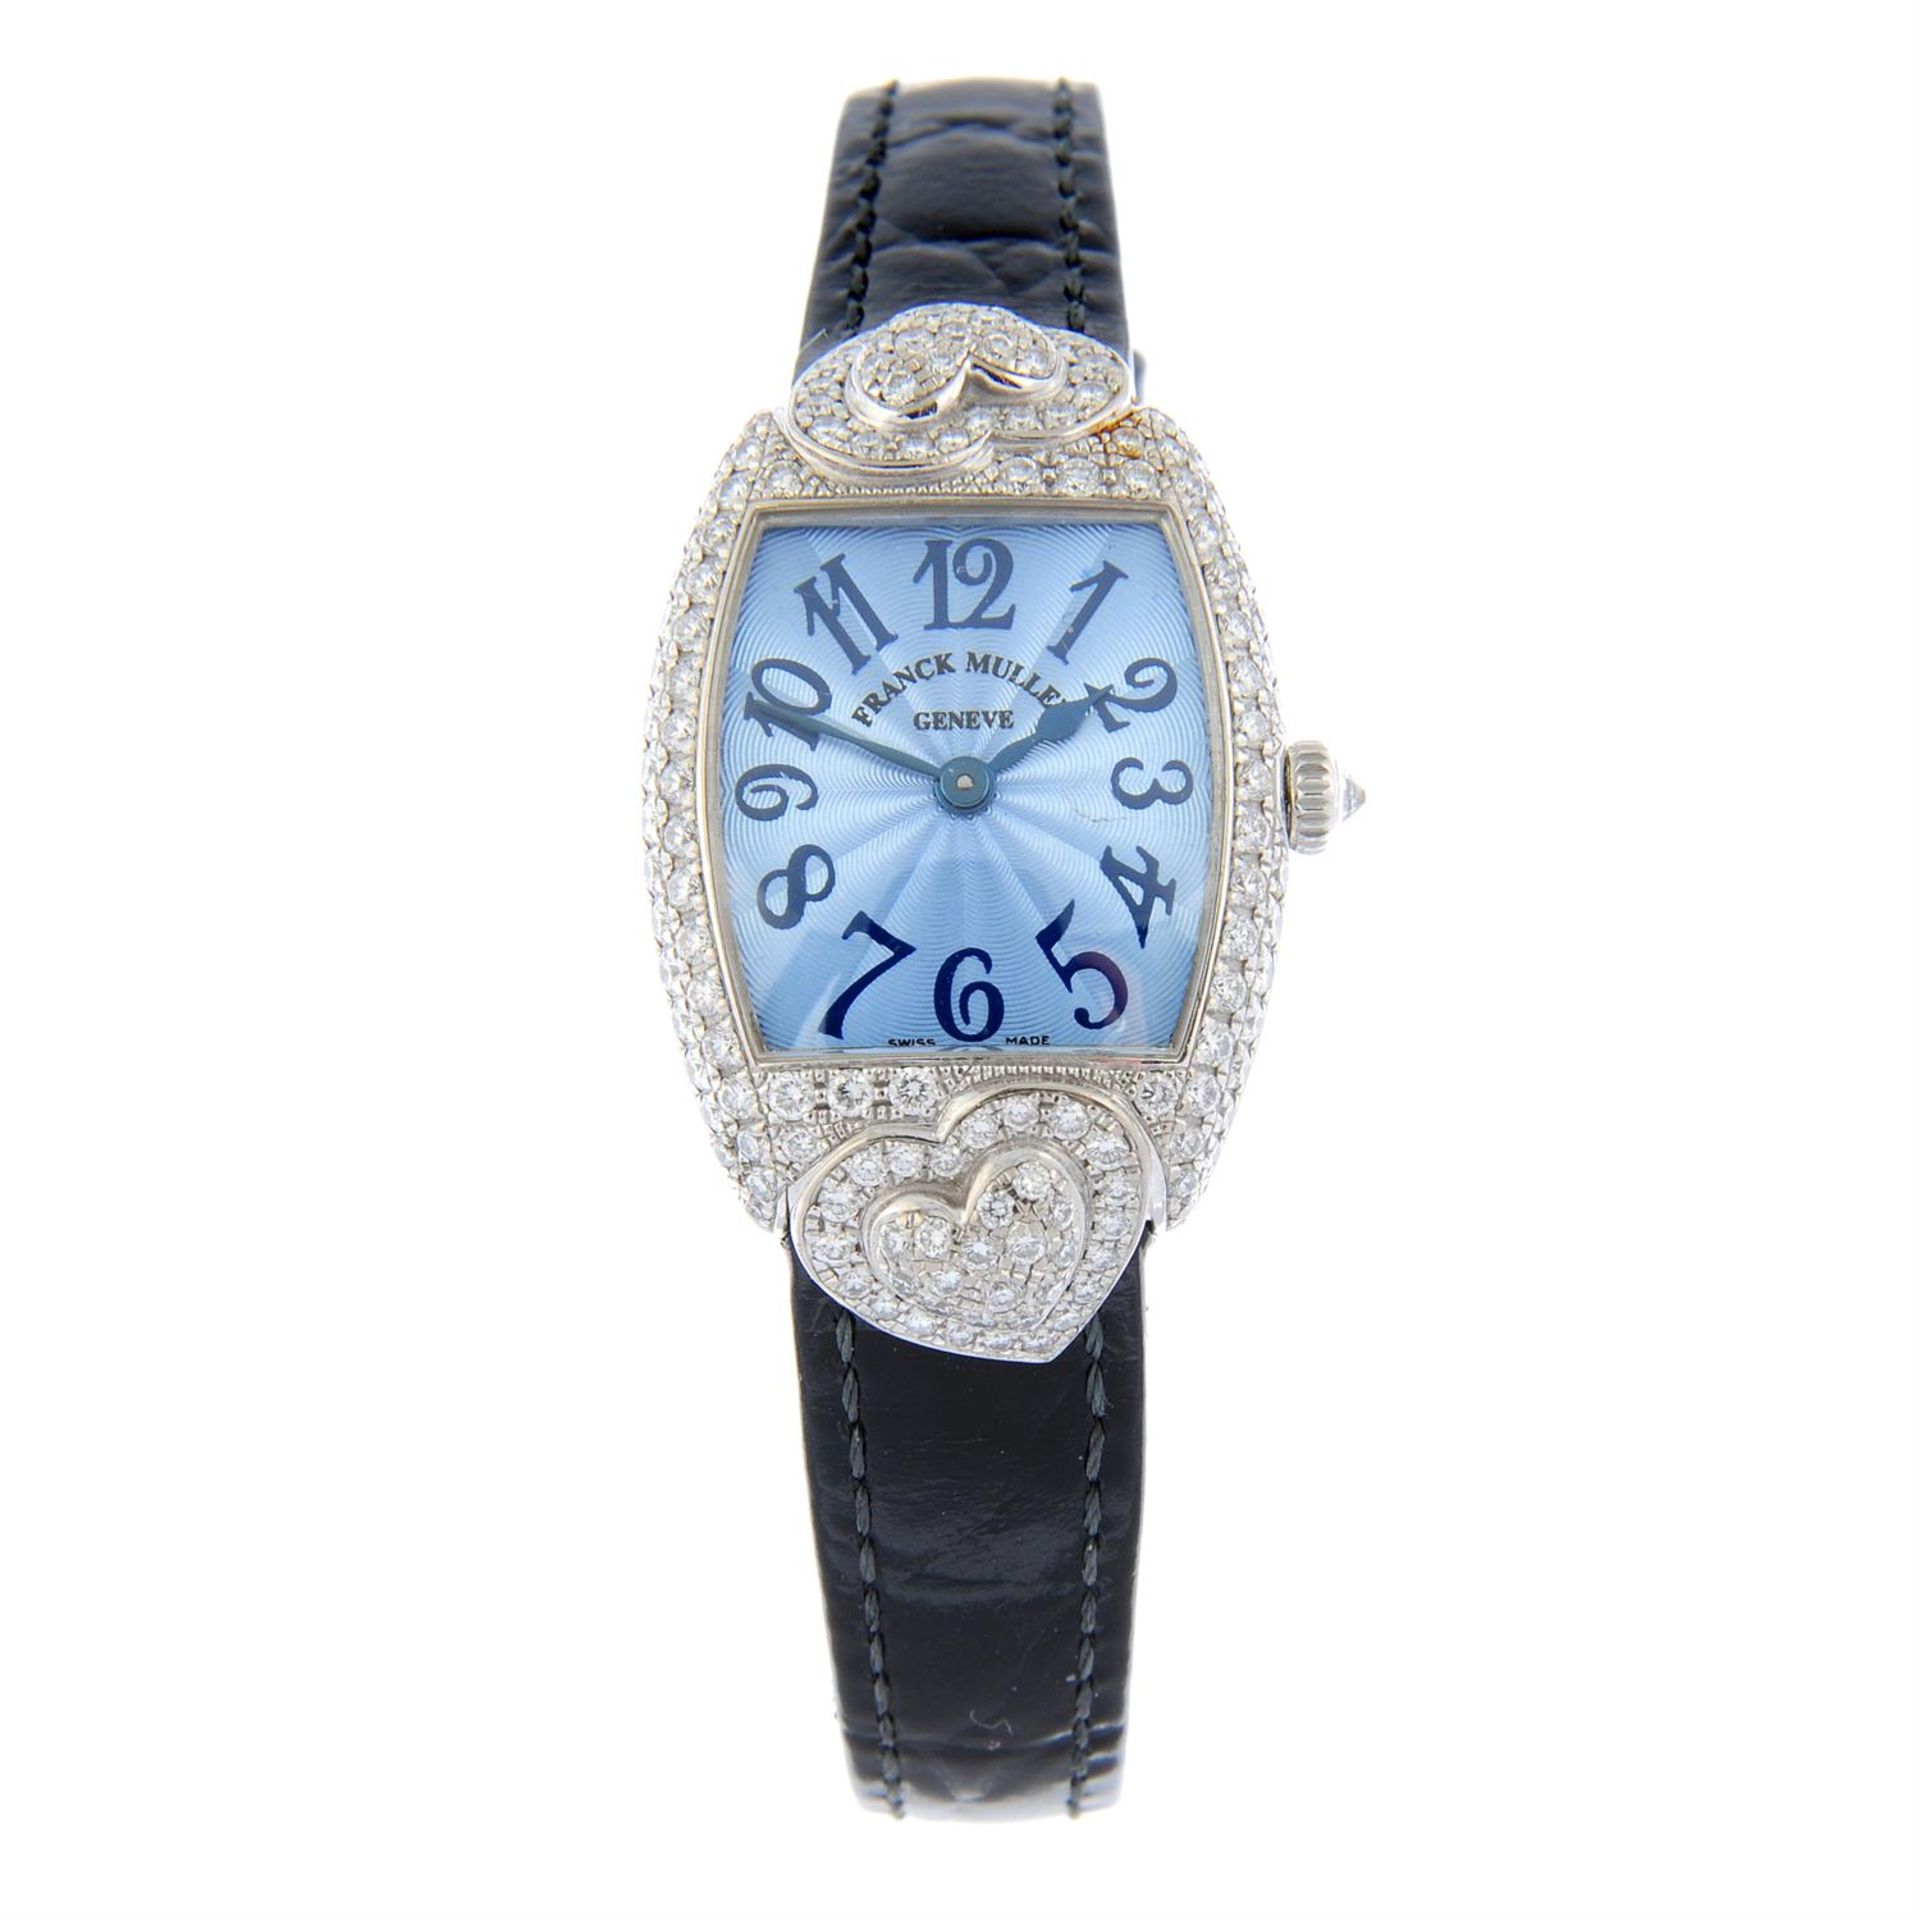 FRANCK MULLER - a factory diamond set 18ct white gold Cintree Curvex wrist watch, 22x36mm.